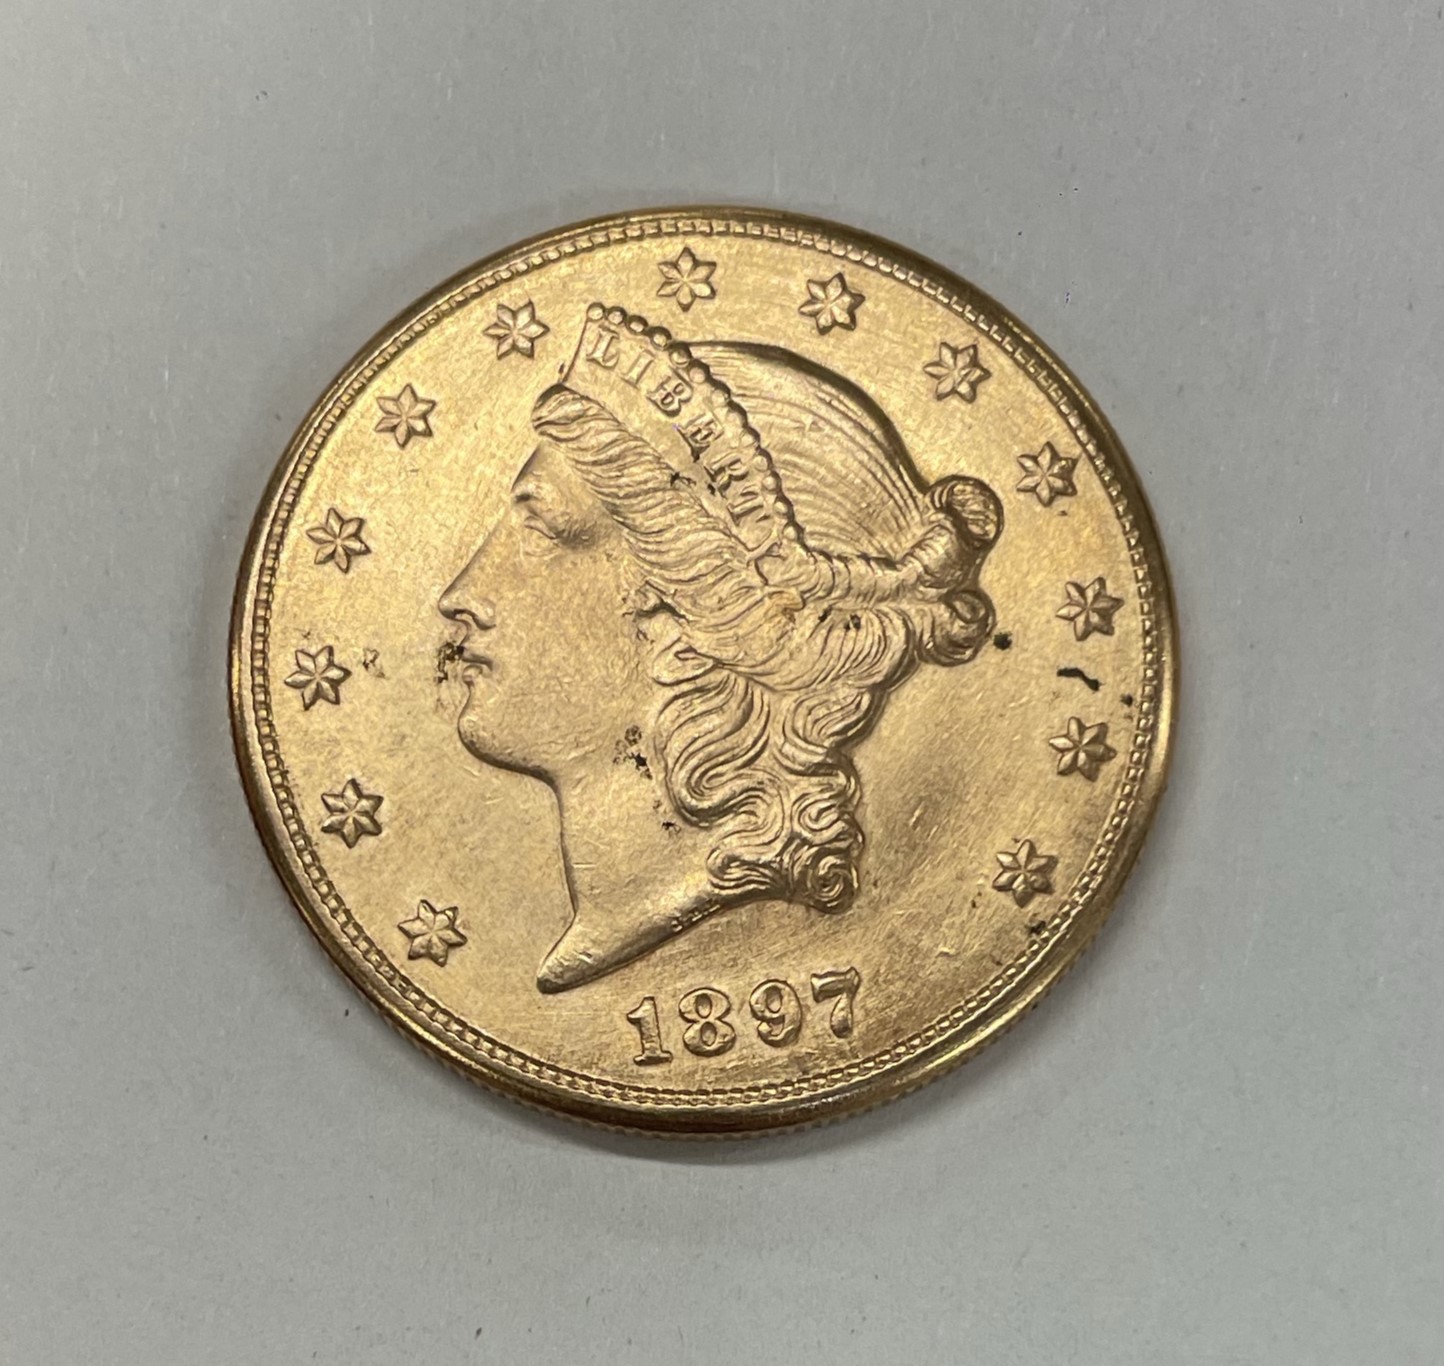 A USA Liberty head twenty dollar coin. - Image 2 of 2